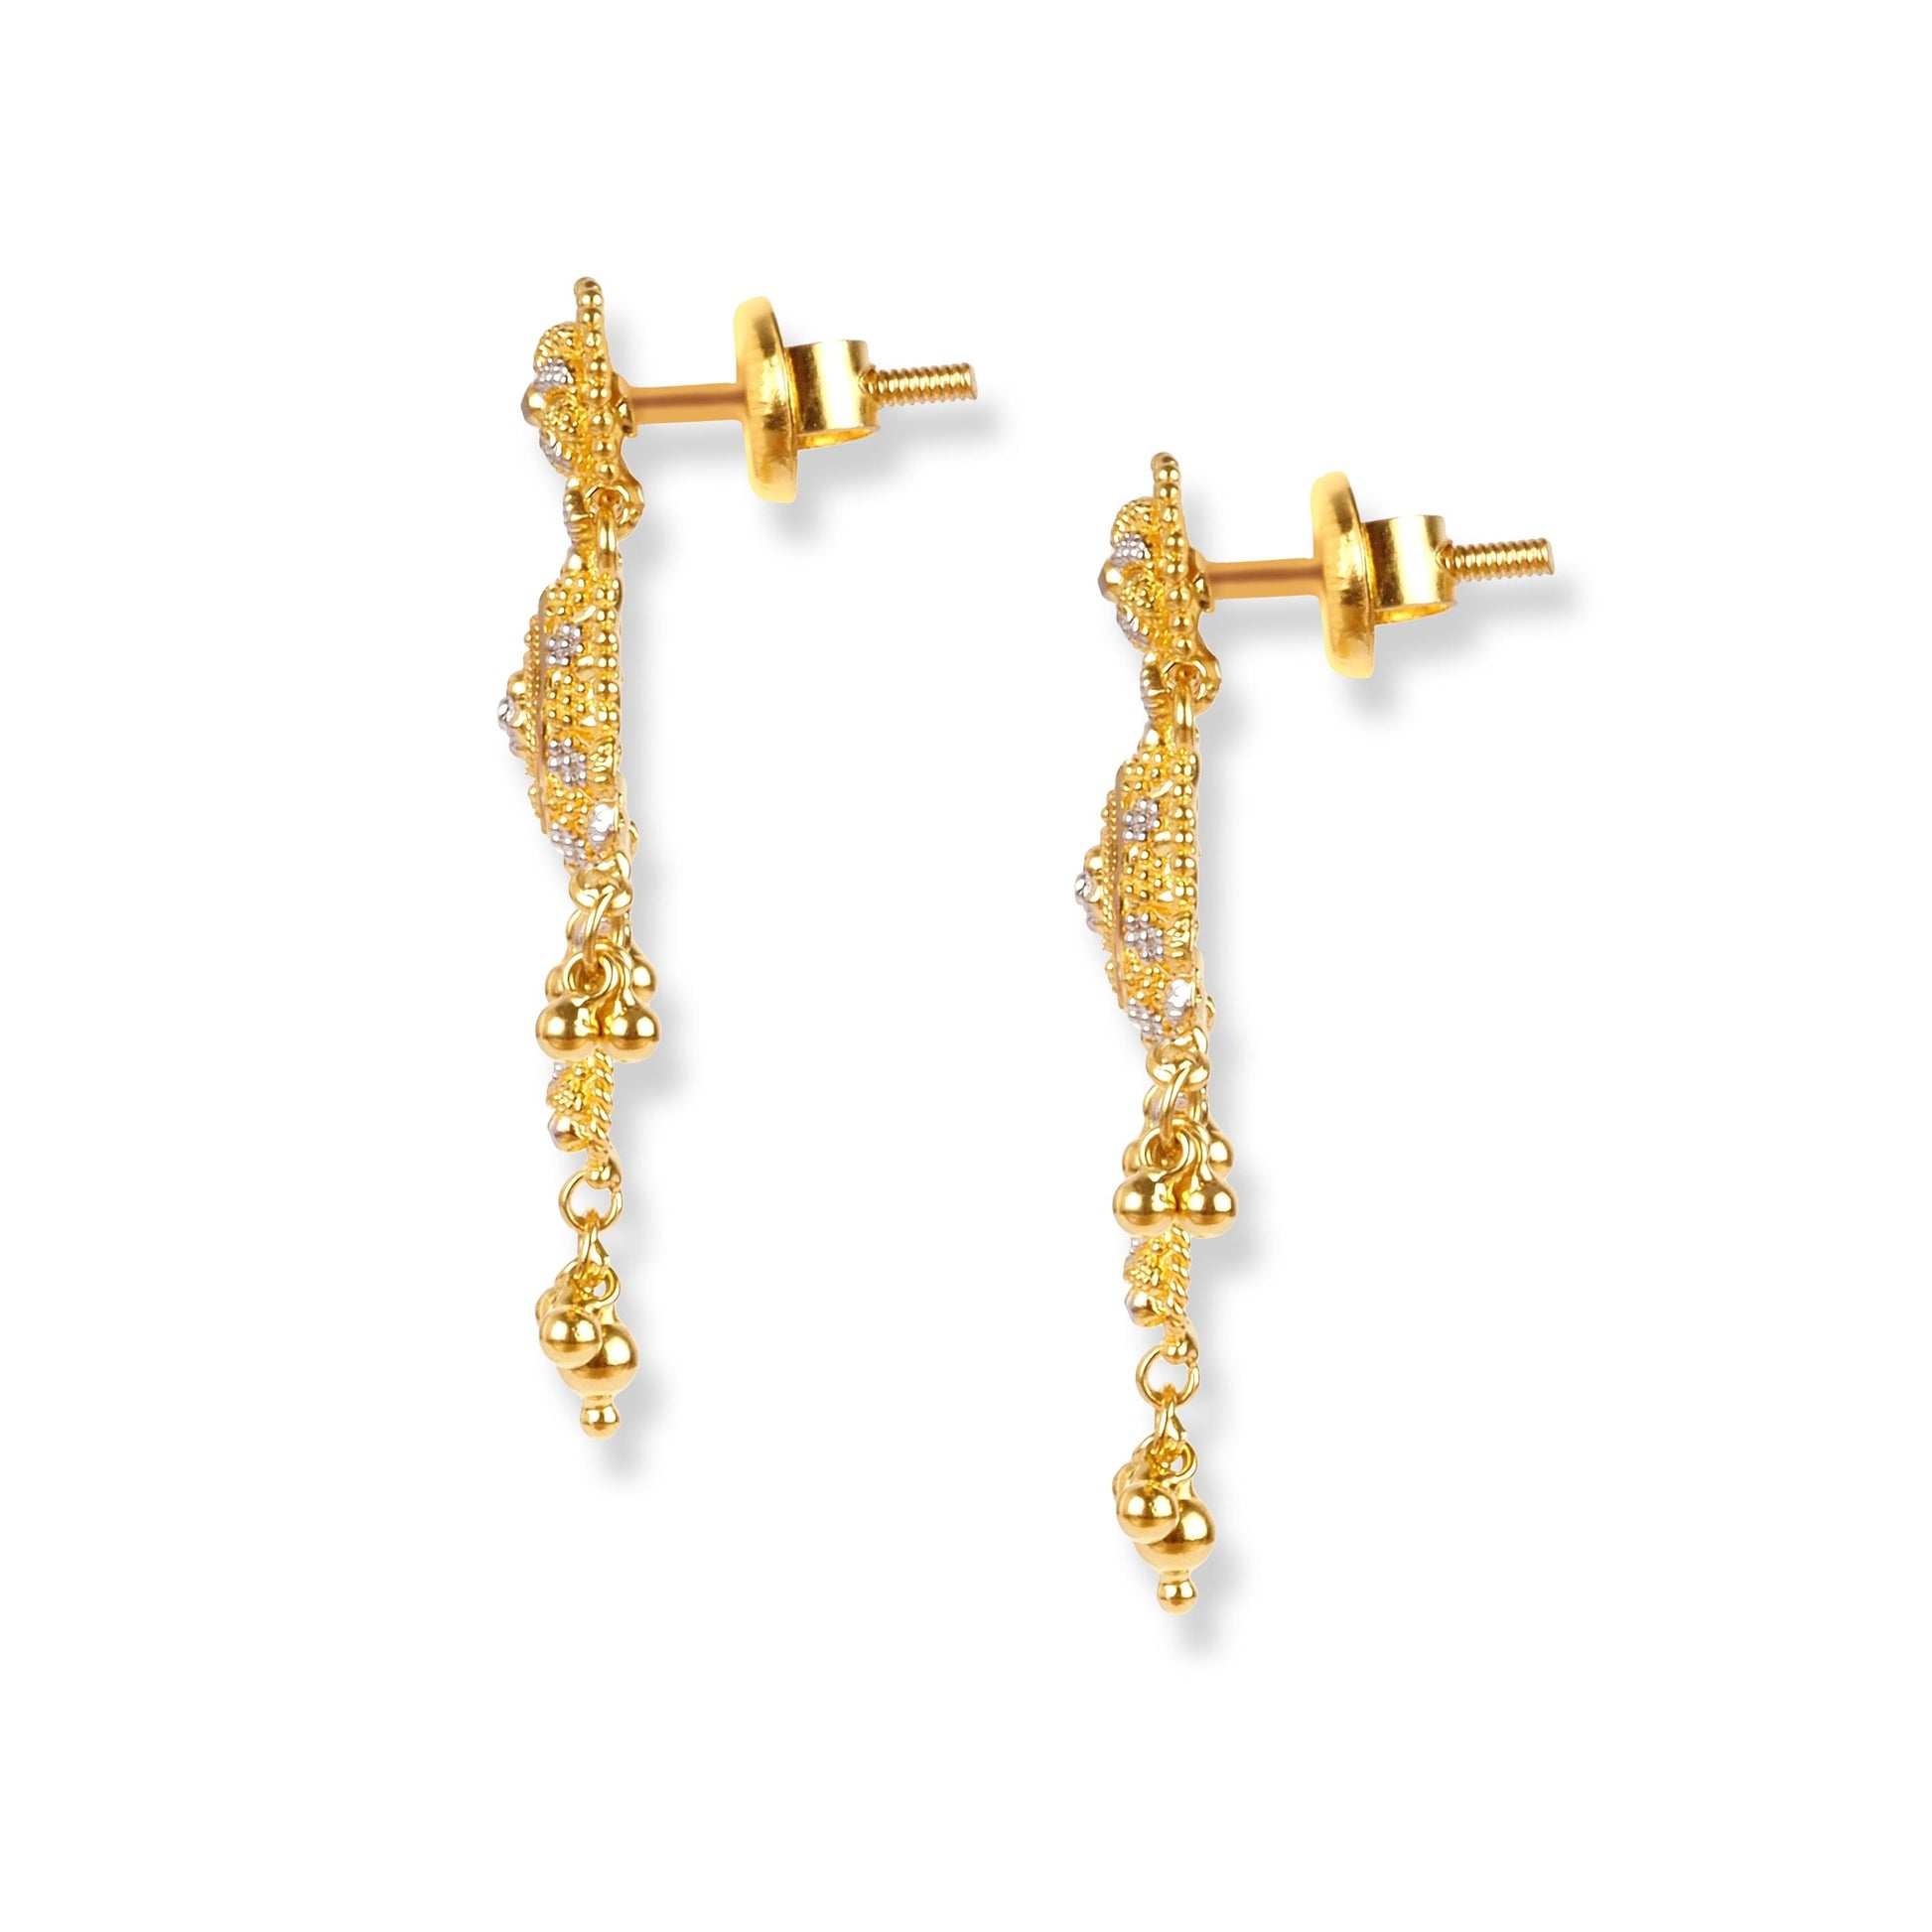 22ct Gold Set with Rhodium Plating & Filigree Work N-7905 - Minar Jewellers